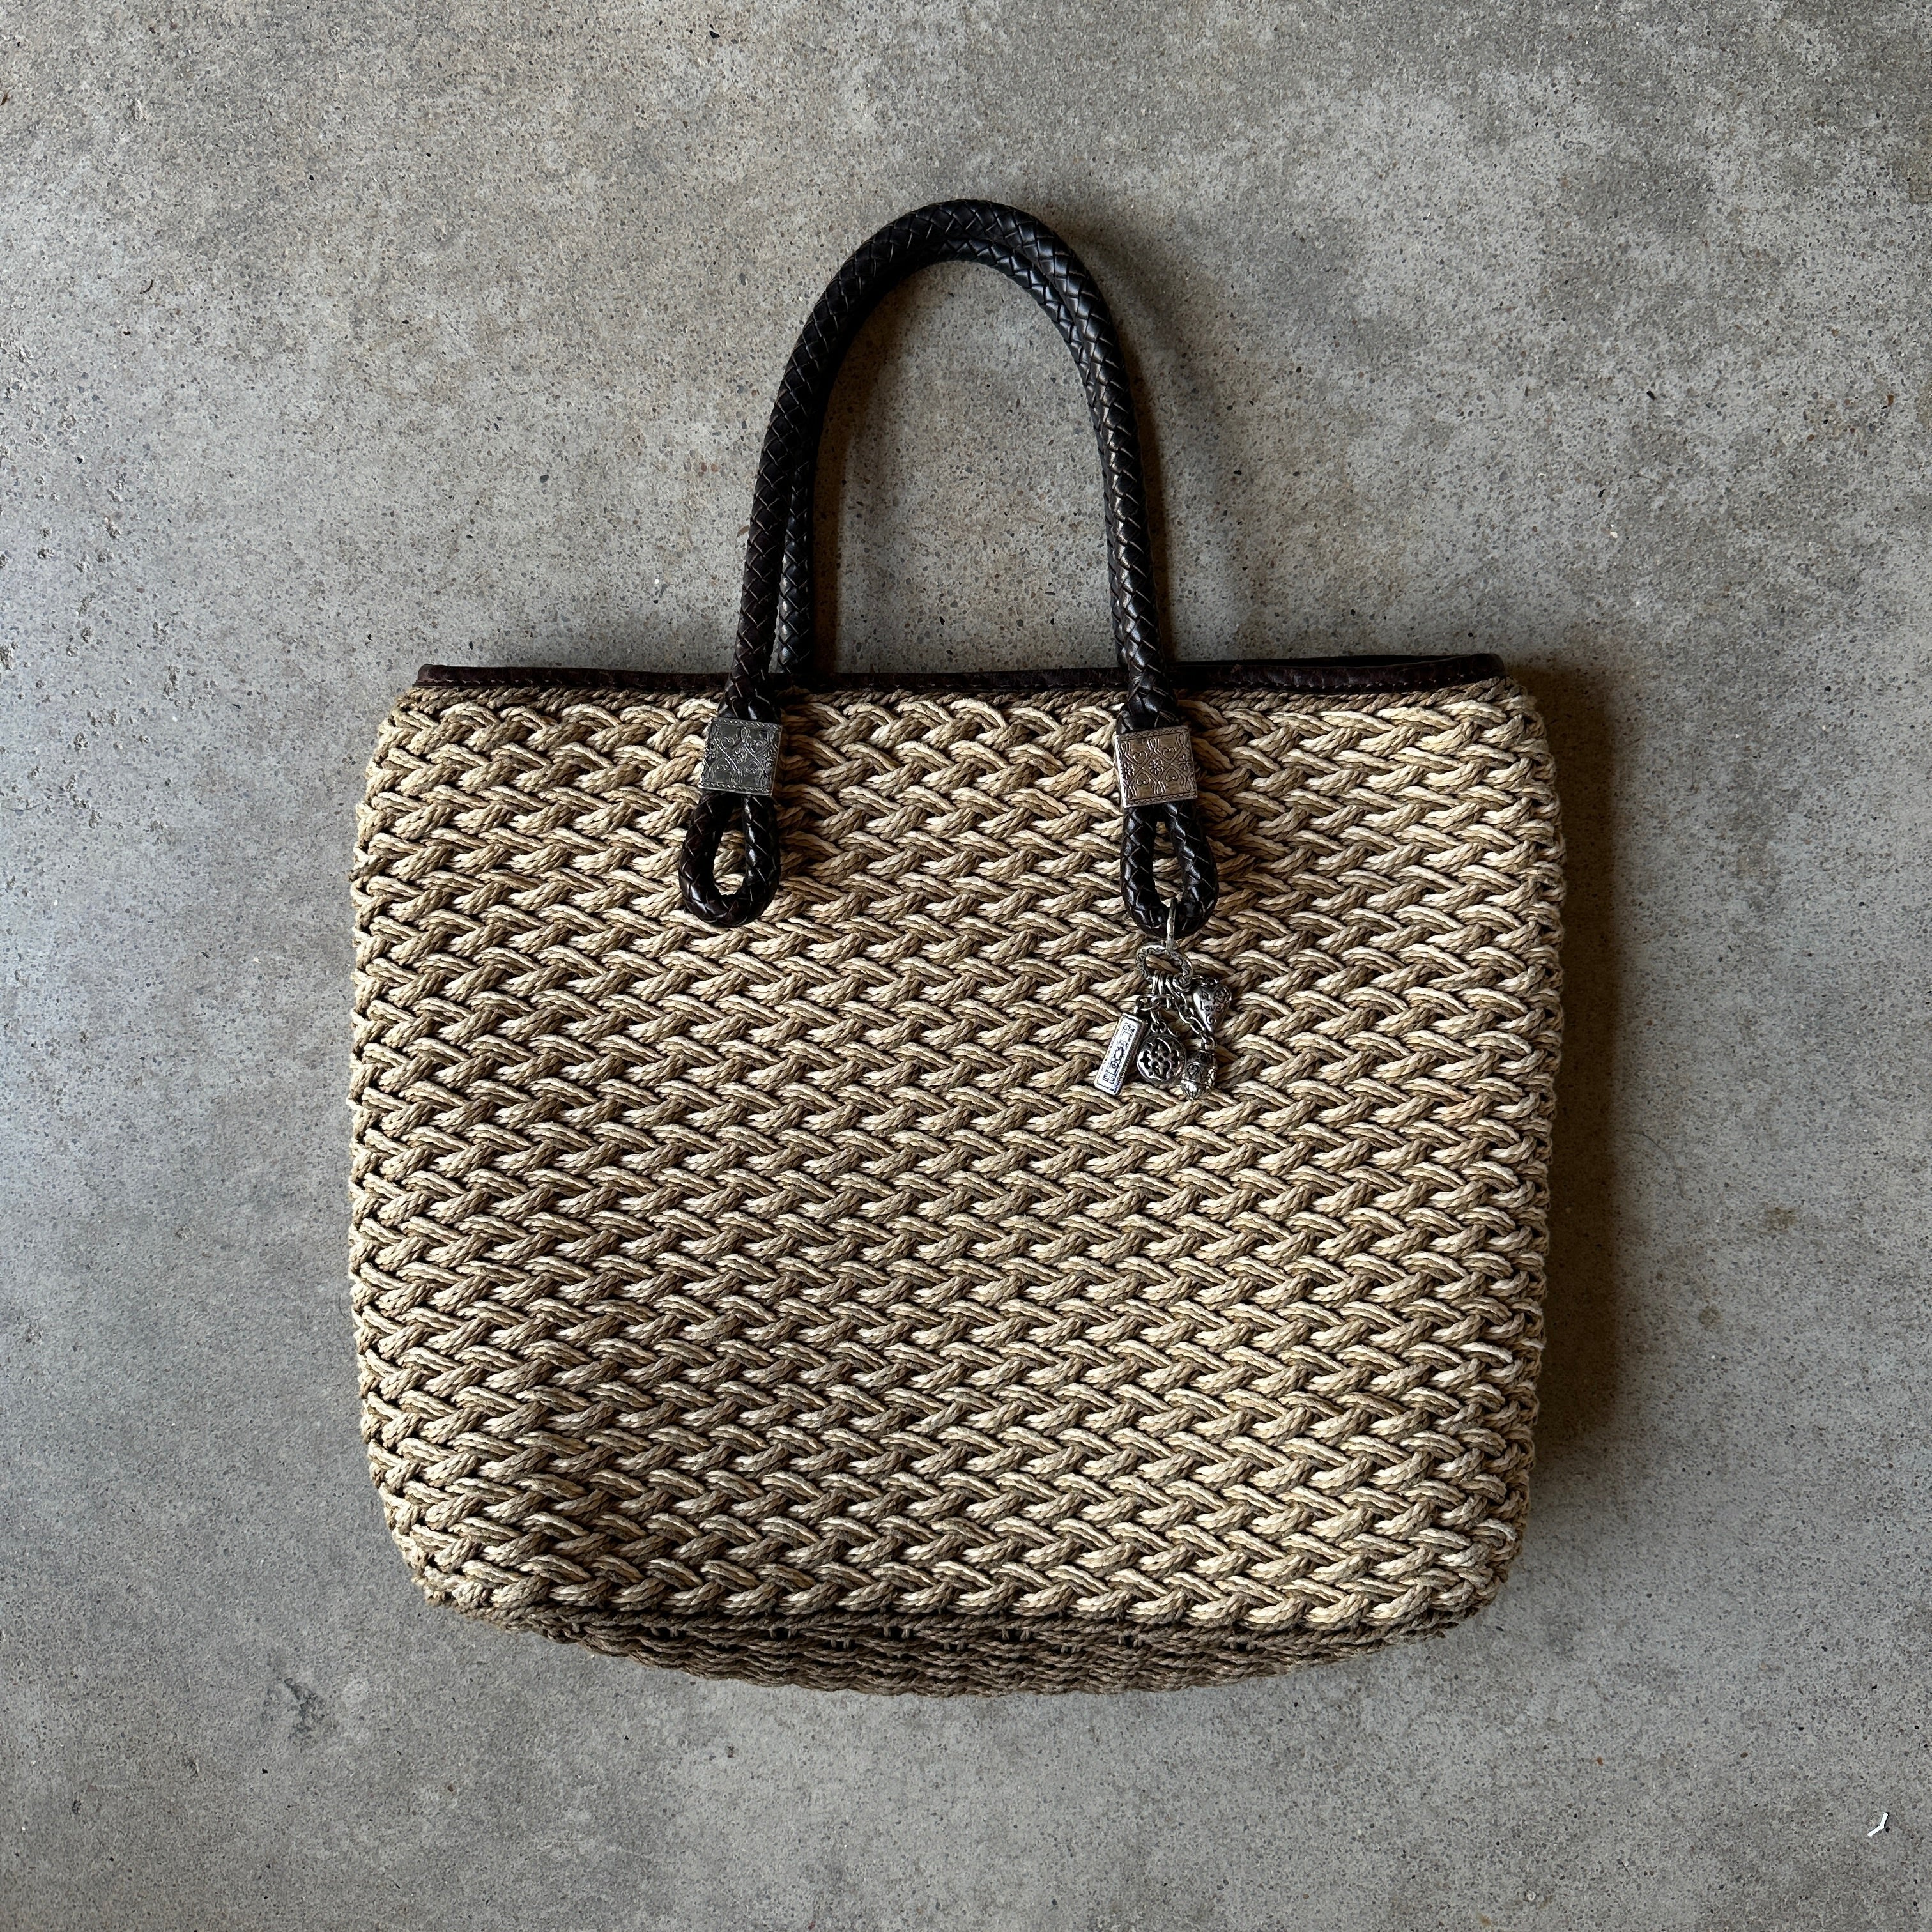 Tan Woven “Brighton” Handbag